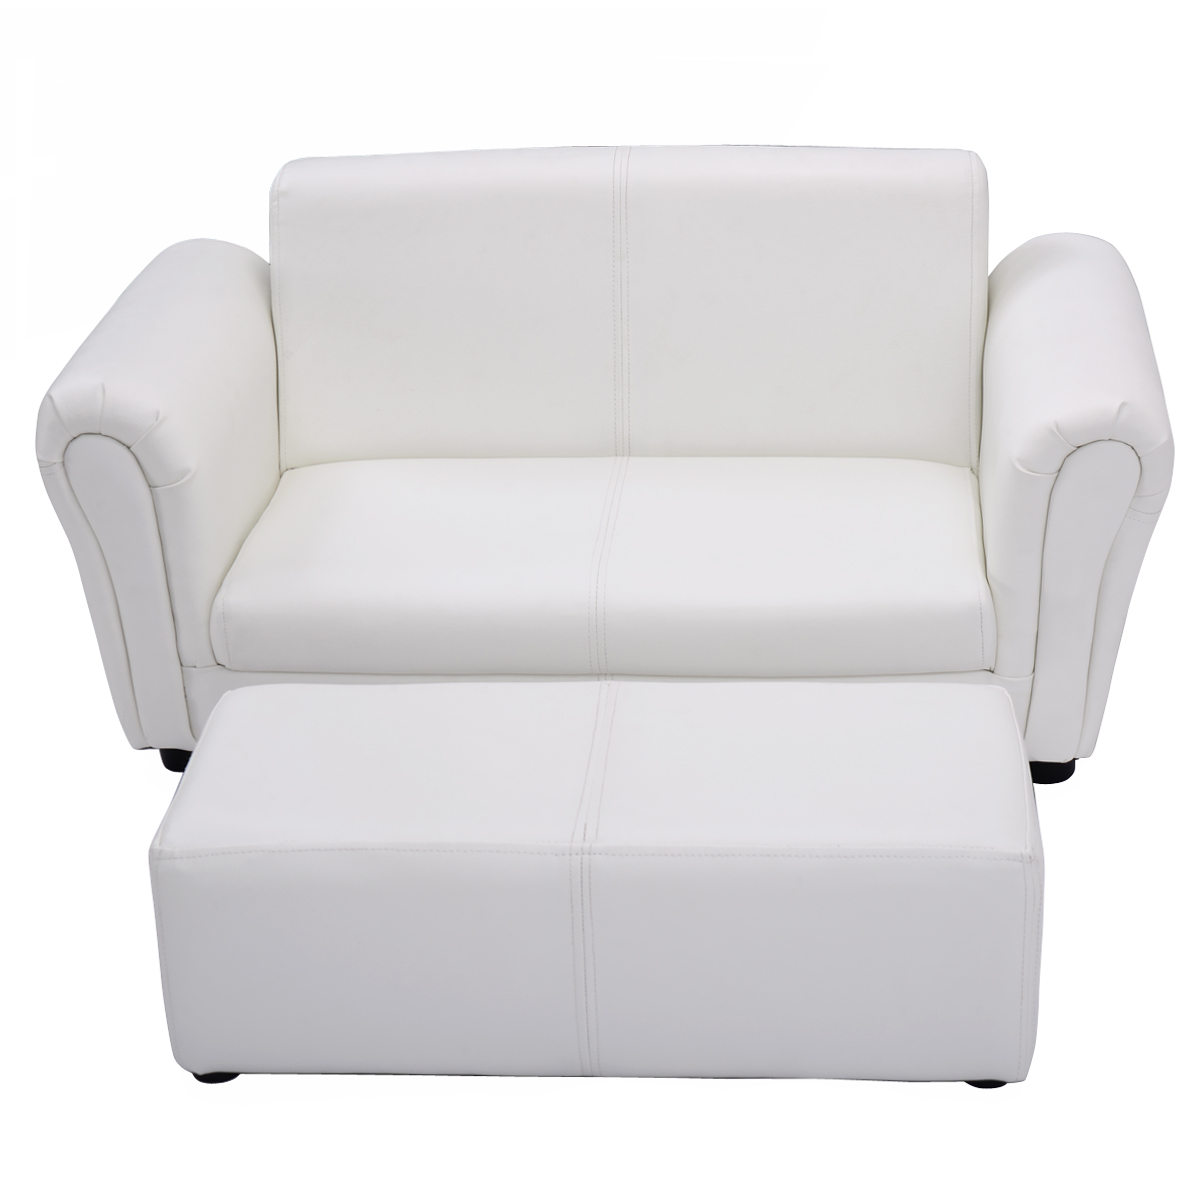 Topbuy Kids Sofa Upholstered Lounge Children Couch Ottoman w/ Armrest White